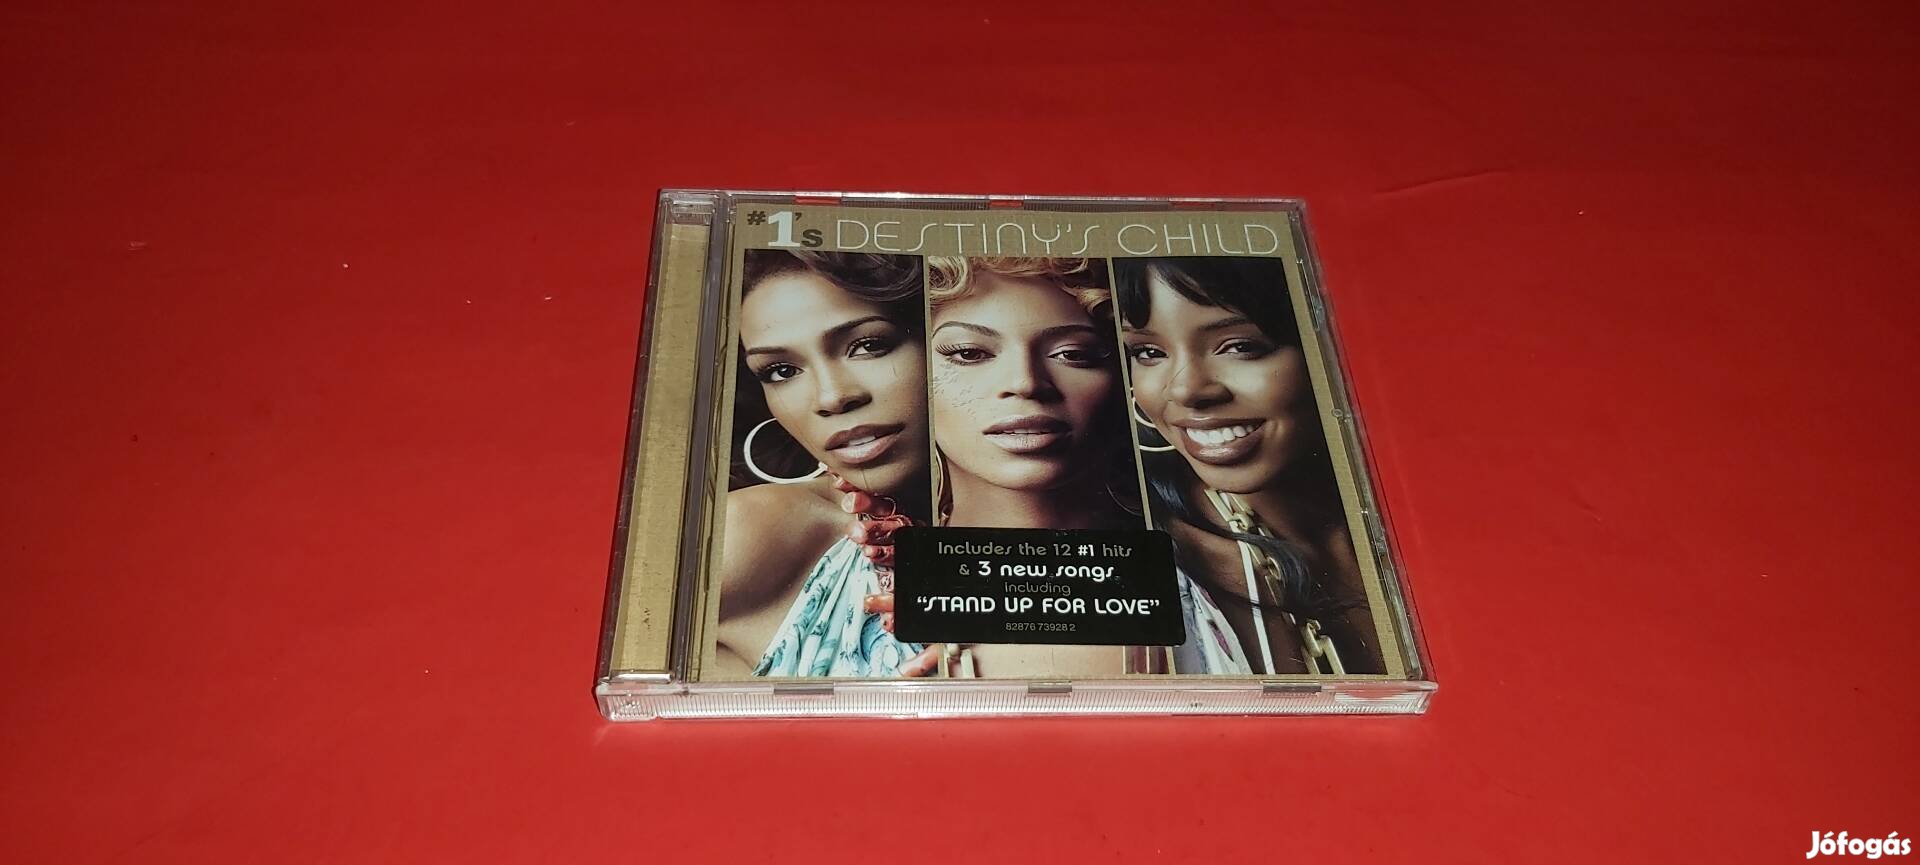 Destiny's Child #1's Cd 2005